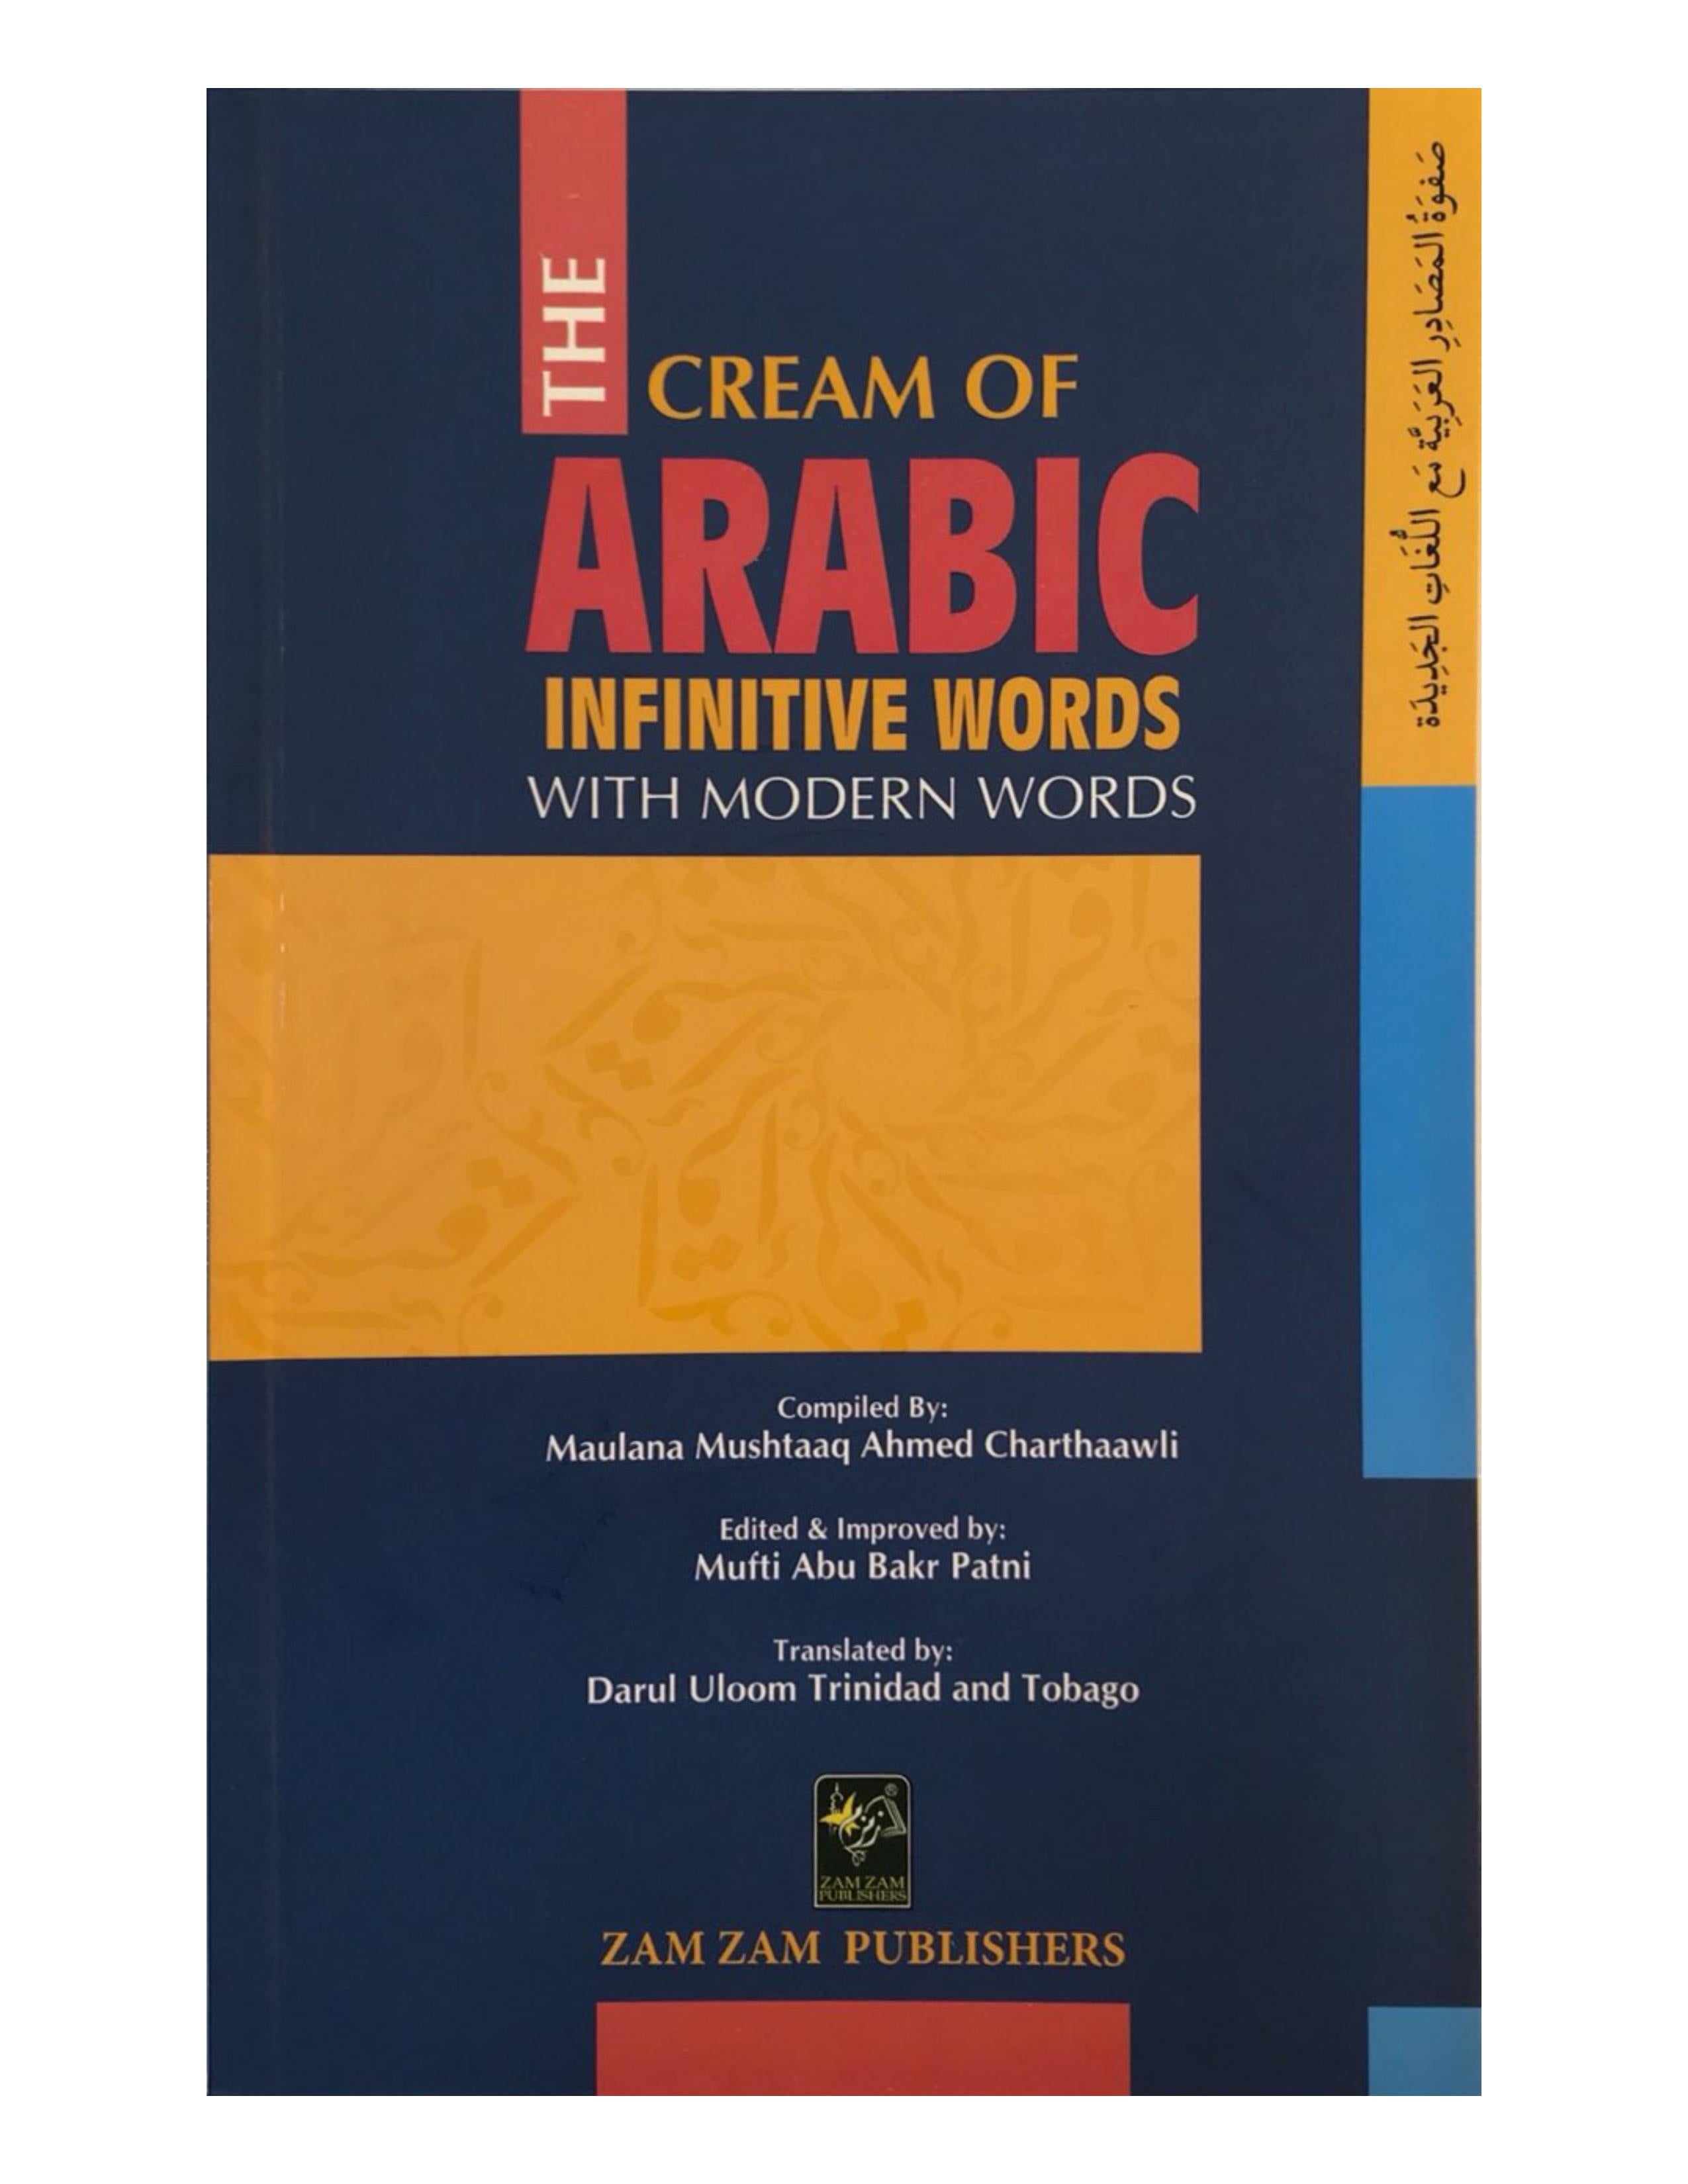 THE CREAM OF ARABIC INFINITIVE WORDS WITH MODERN WORDS - aljareer online